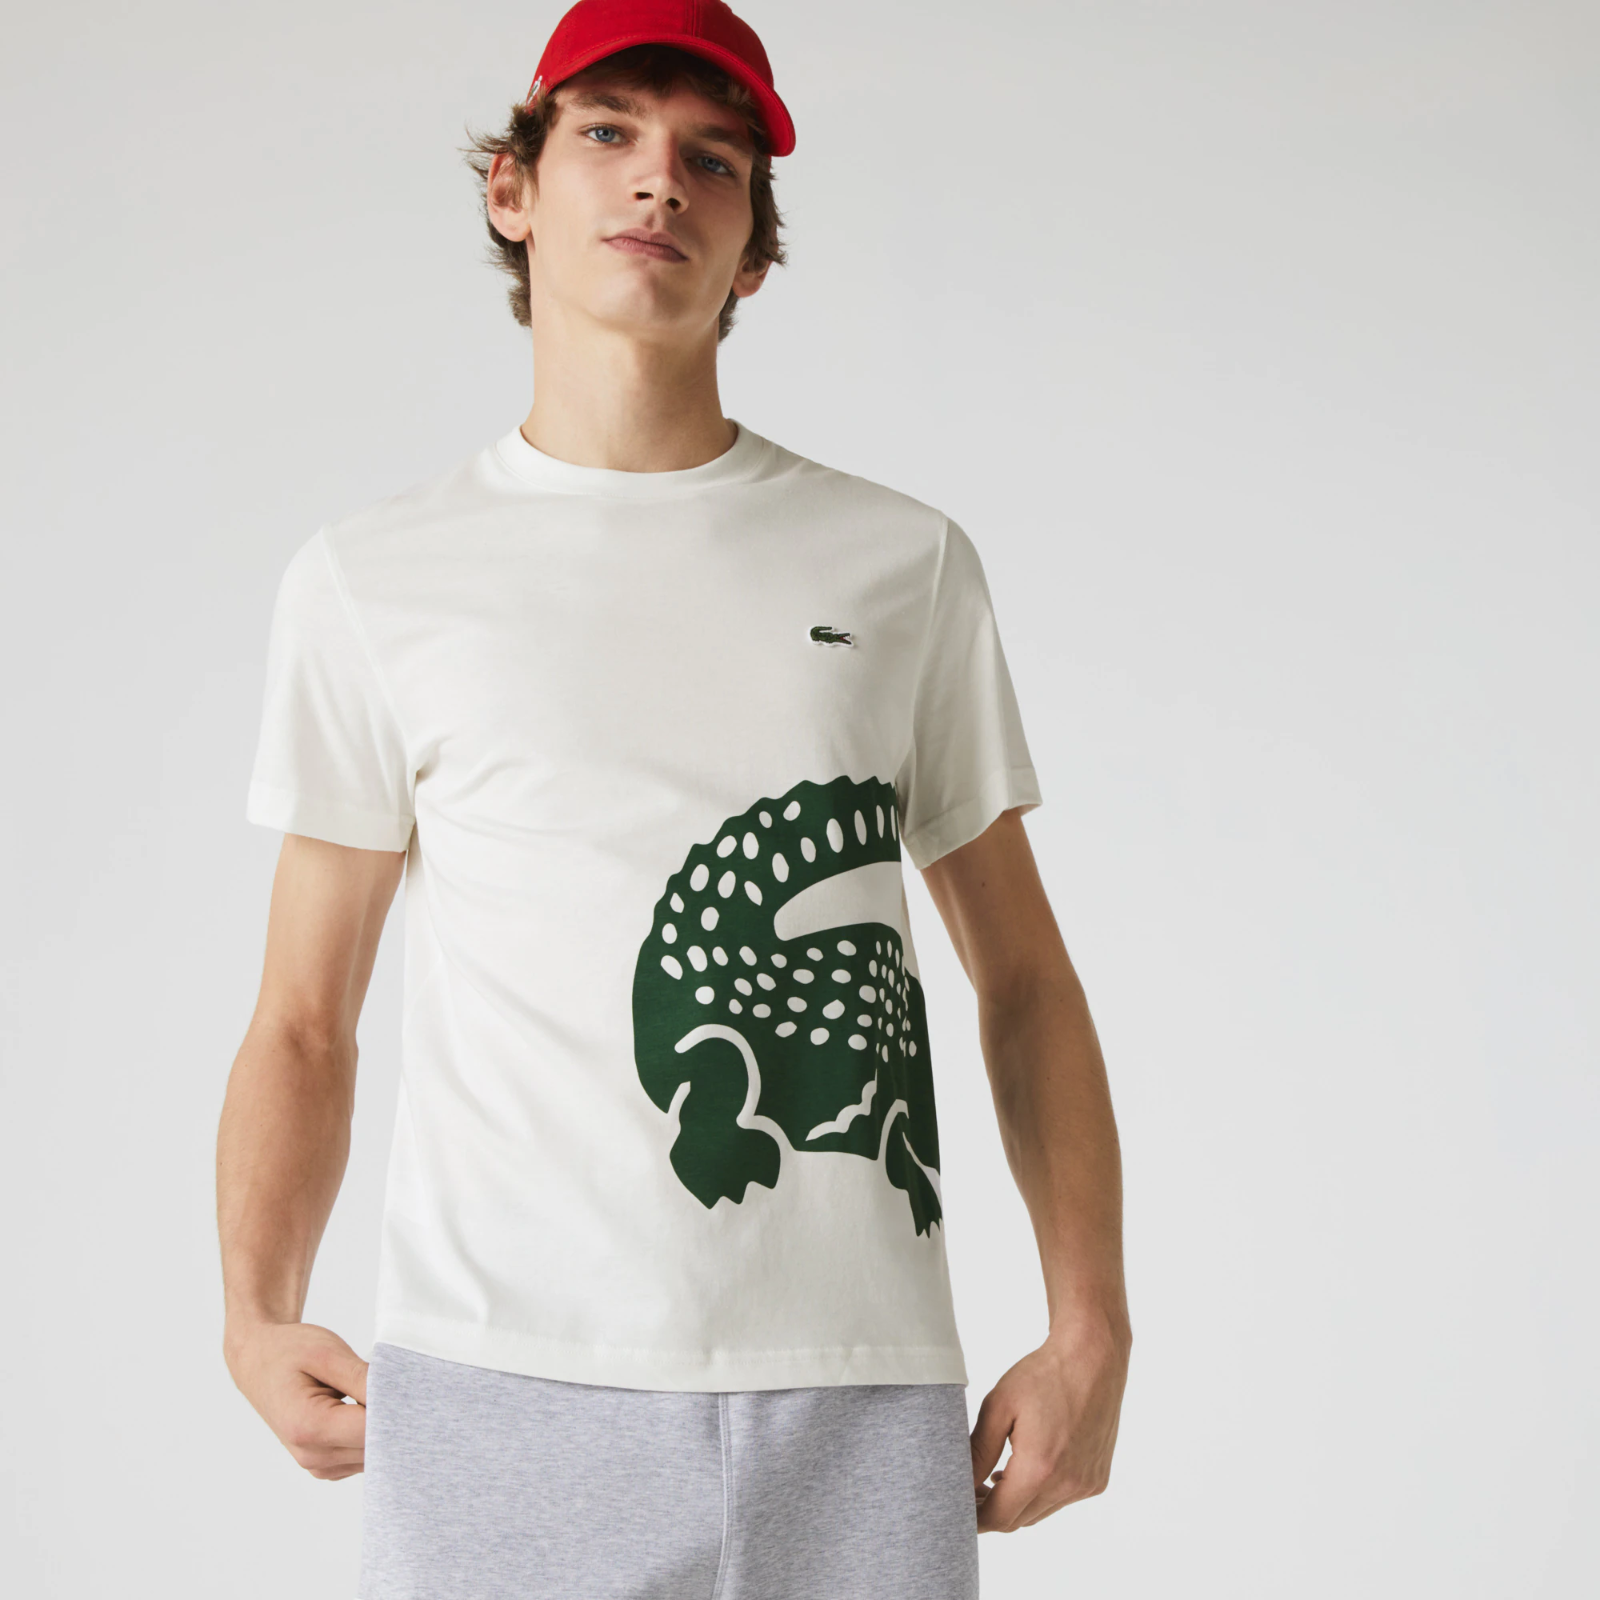 Men’s Oversize Croc Crew Neck Jersey T-shirt TH5139-51